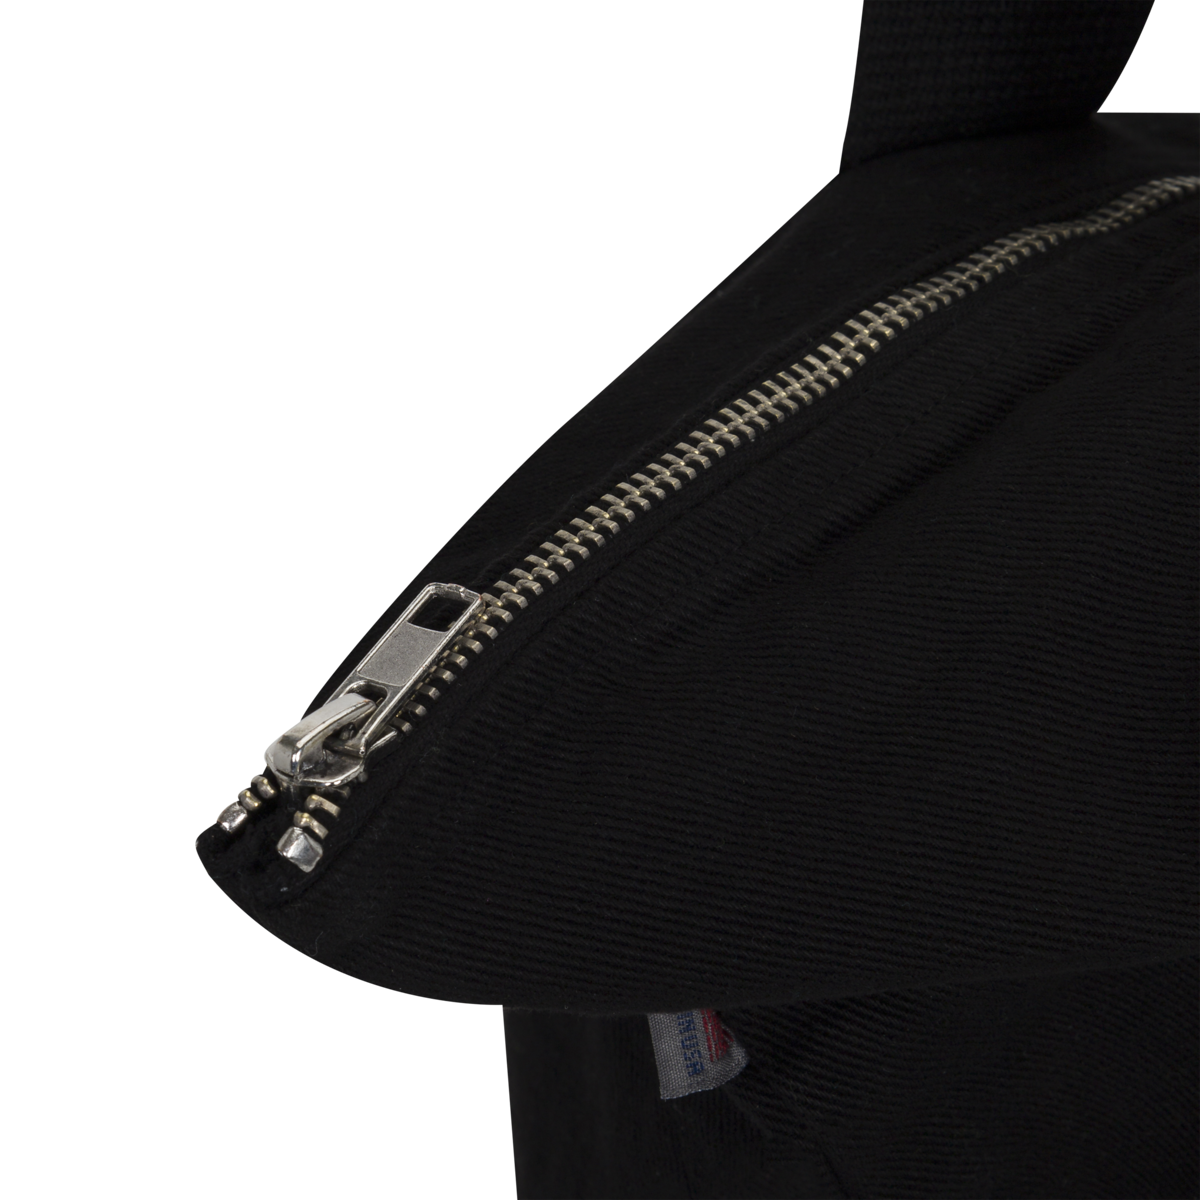 Mike Lottie x Grillo's Twisted Metal Zipper Bag